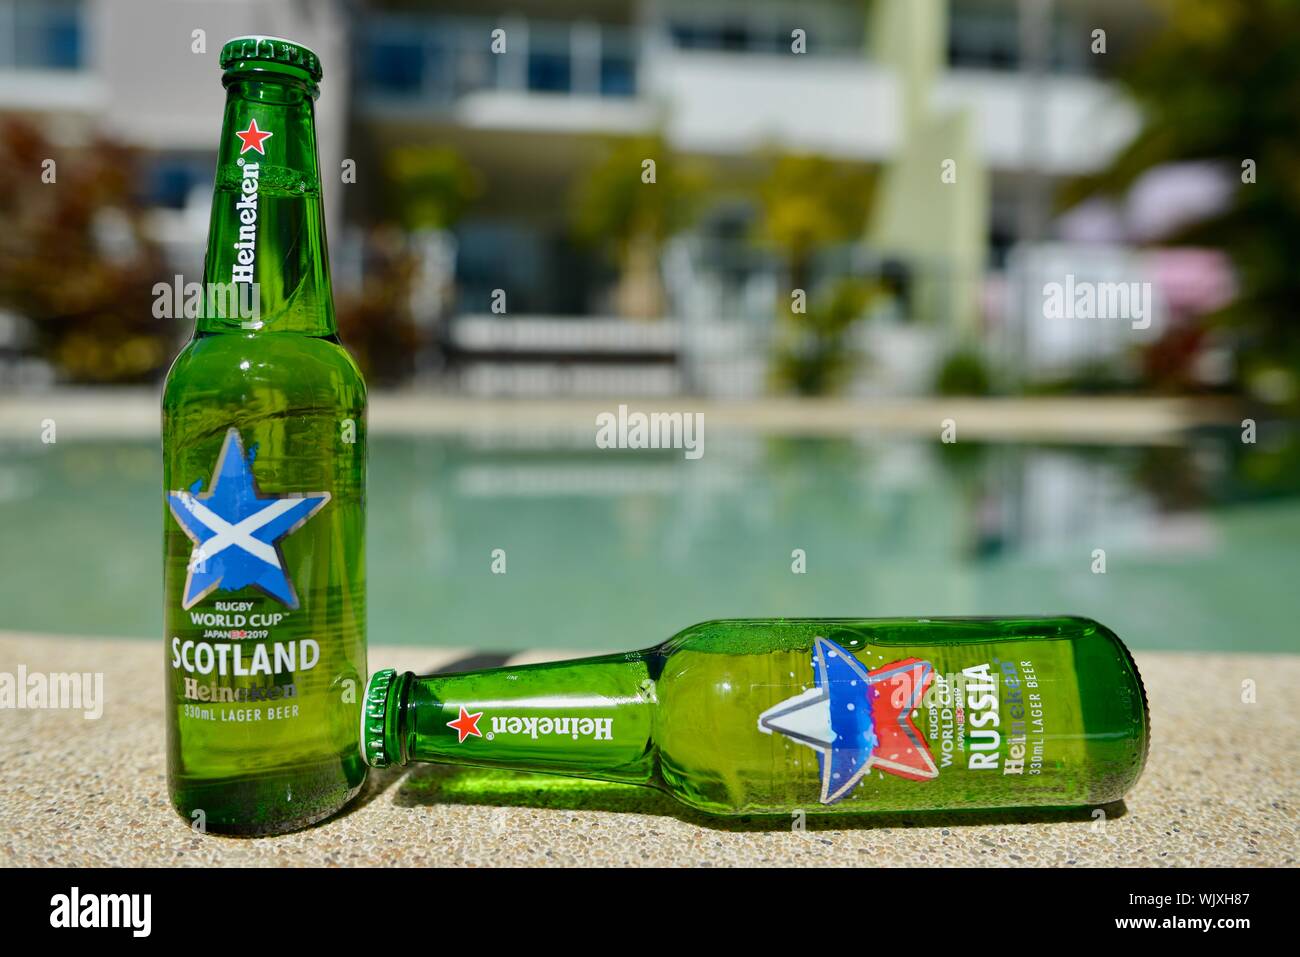 Scotland versus Russia, Heineken 2019 Japan Rugby world cup beer bottles Stock Photo